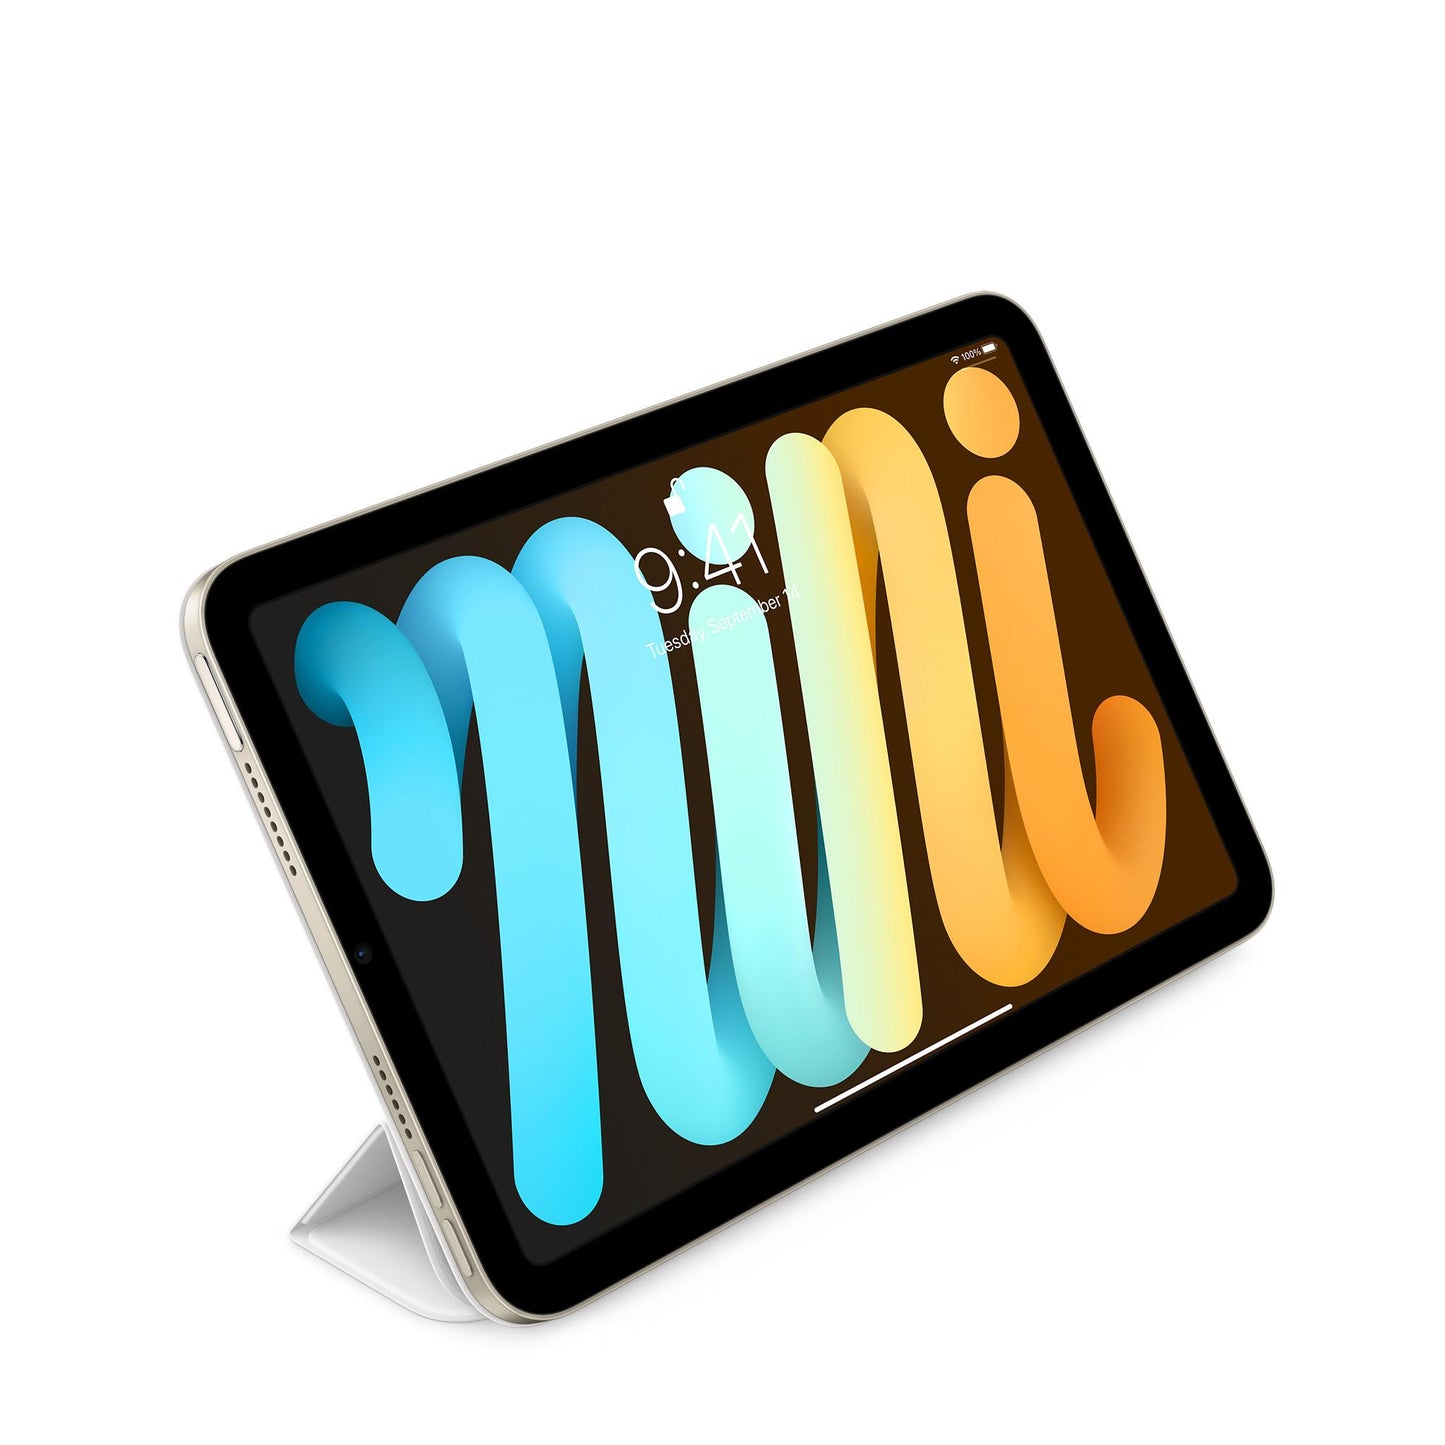 Smart Folio for iPad mini (6th generation) - White